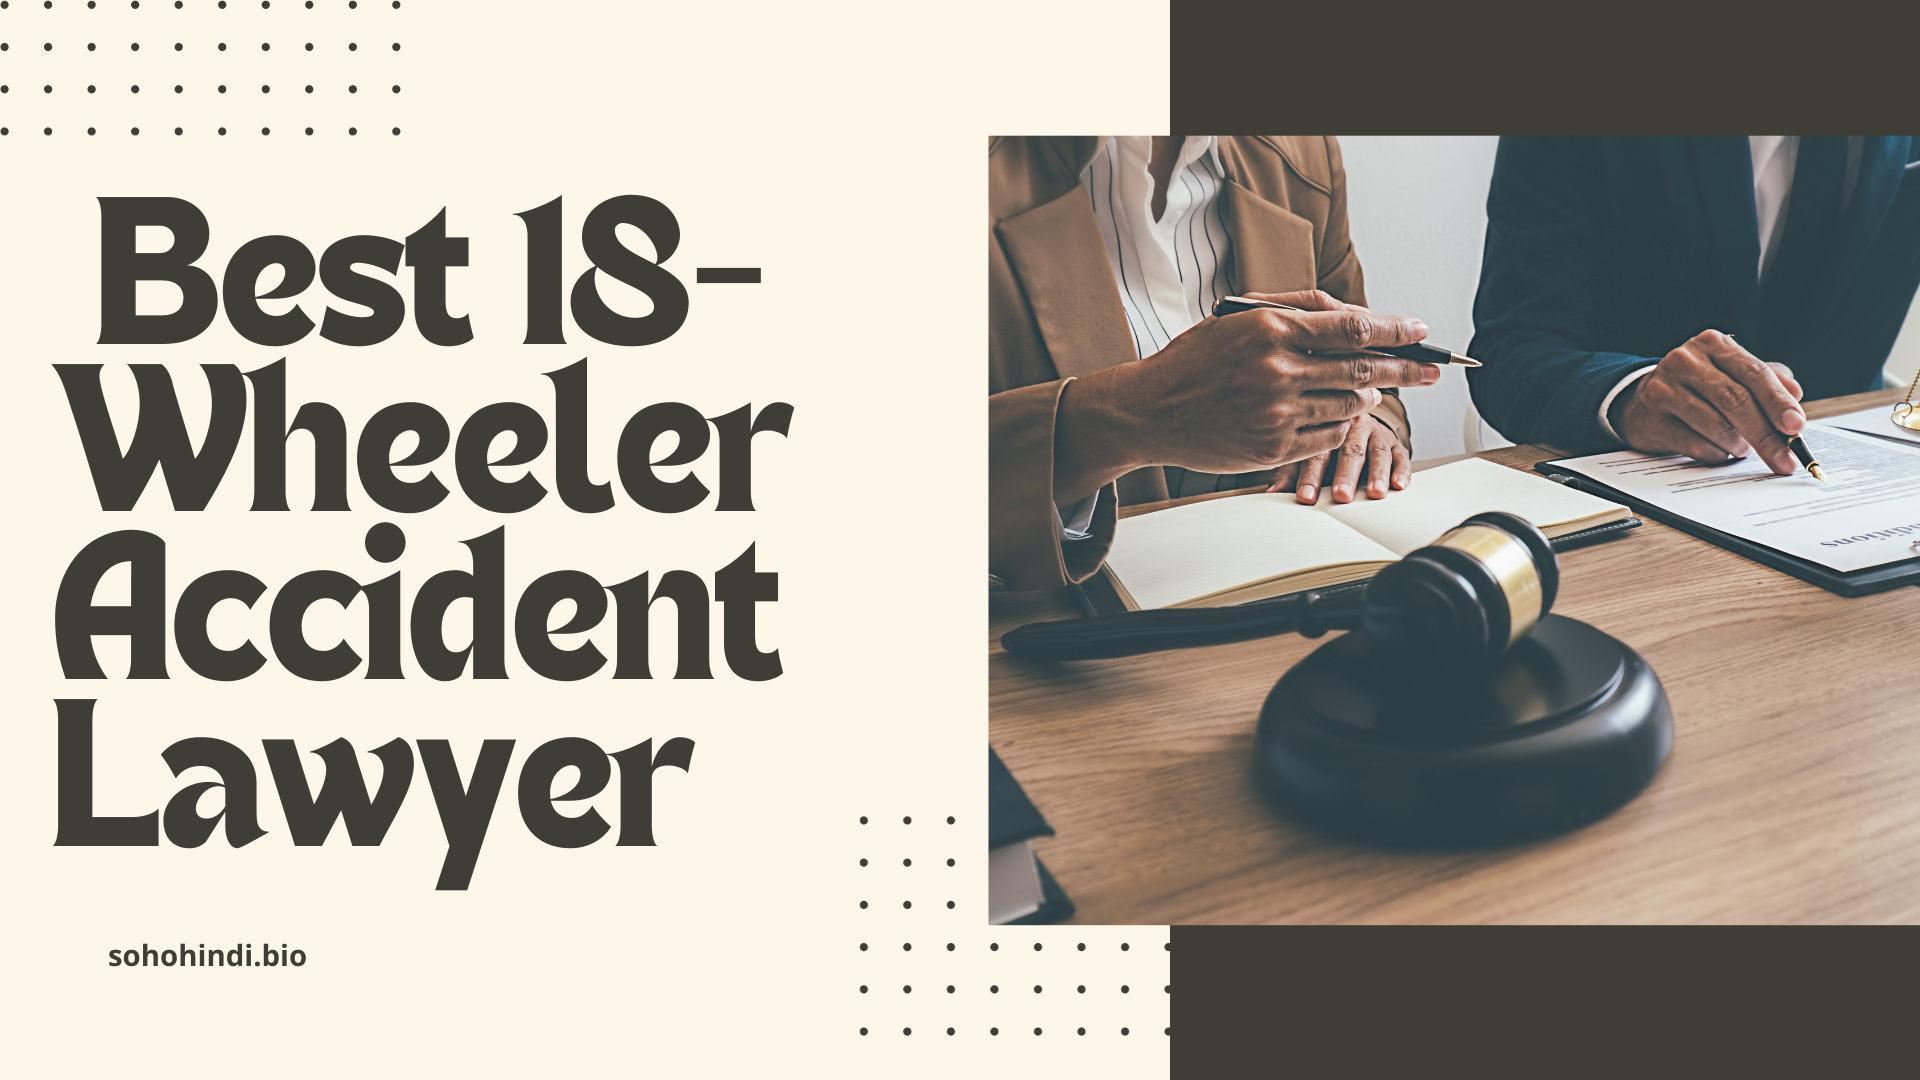 Best 18-Wheeler Accident Lawyer